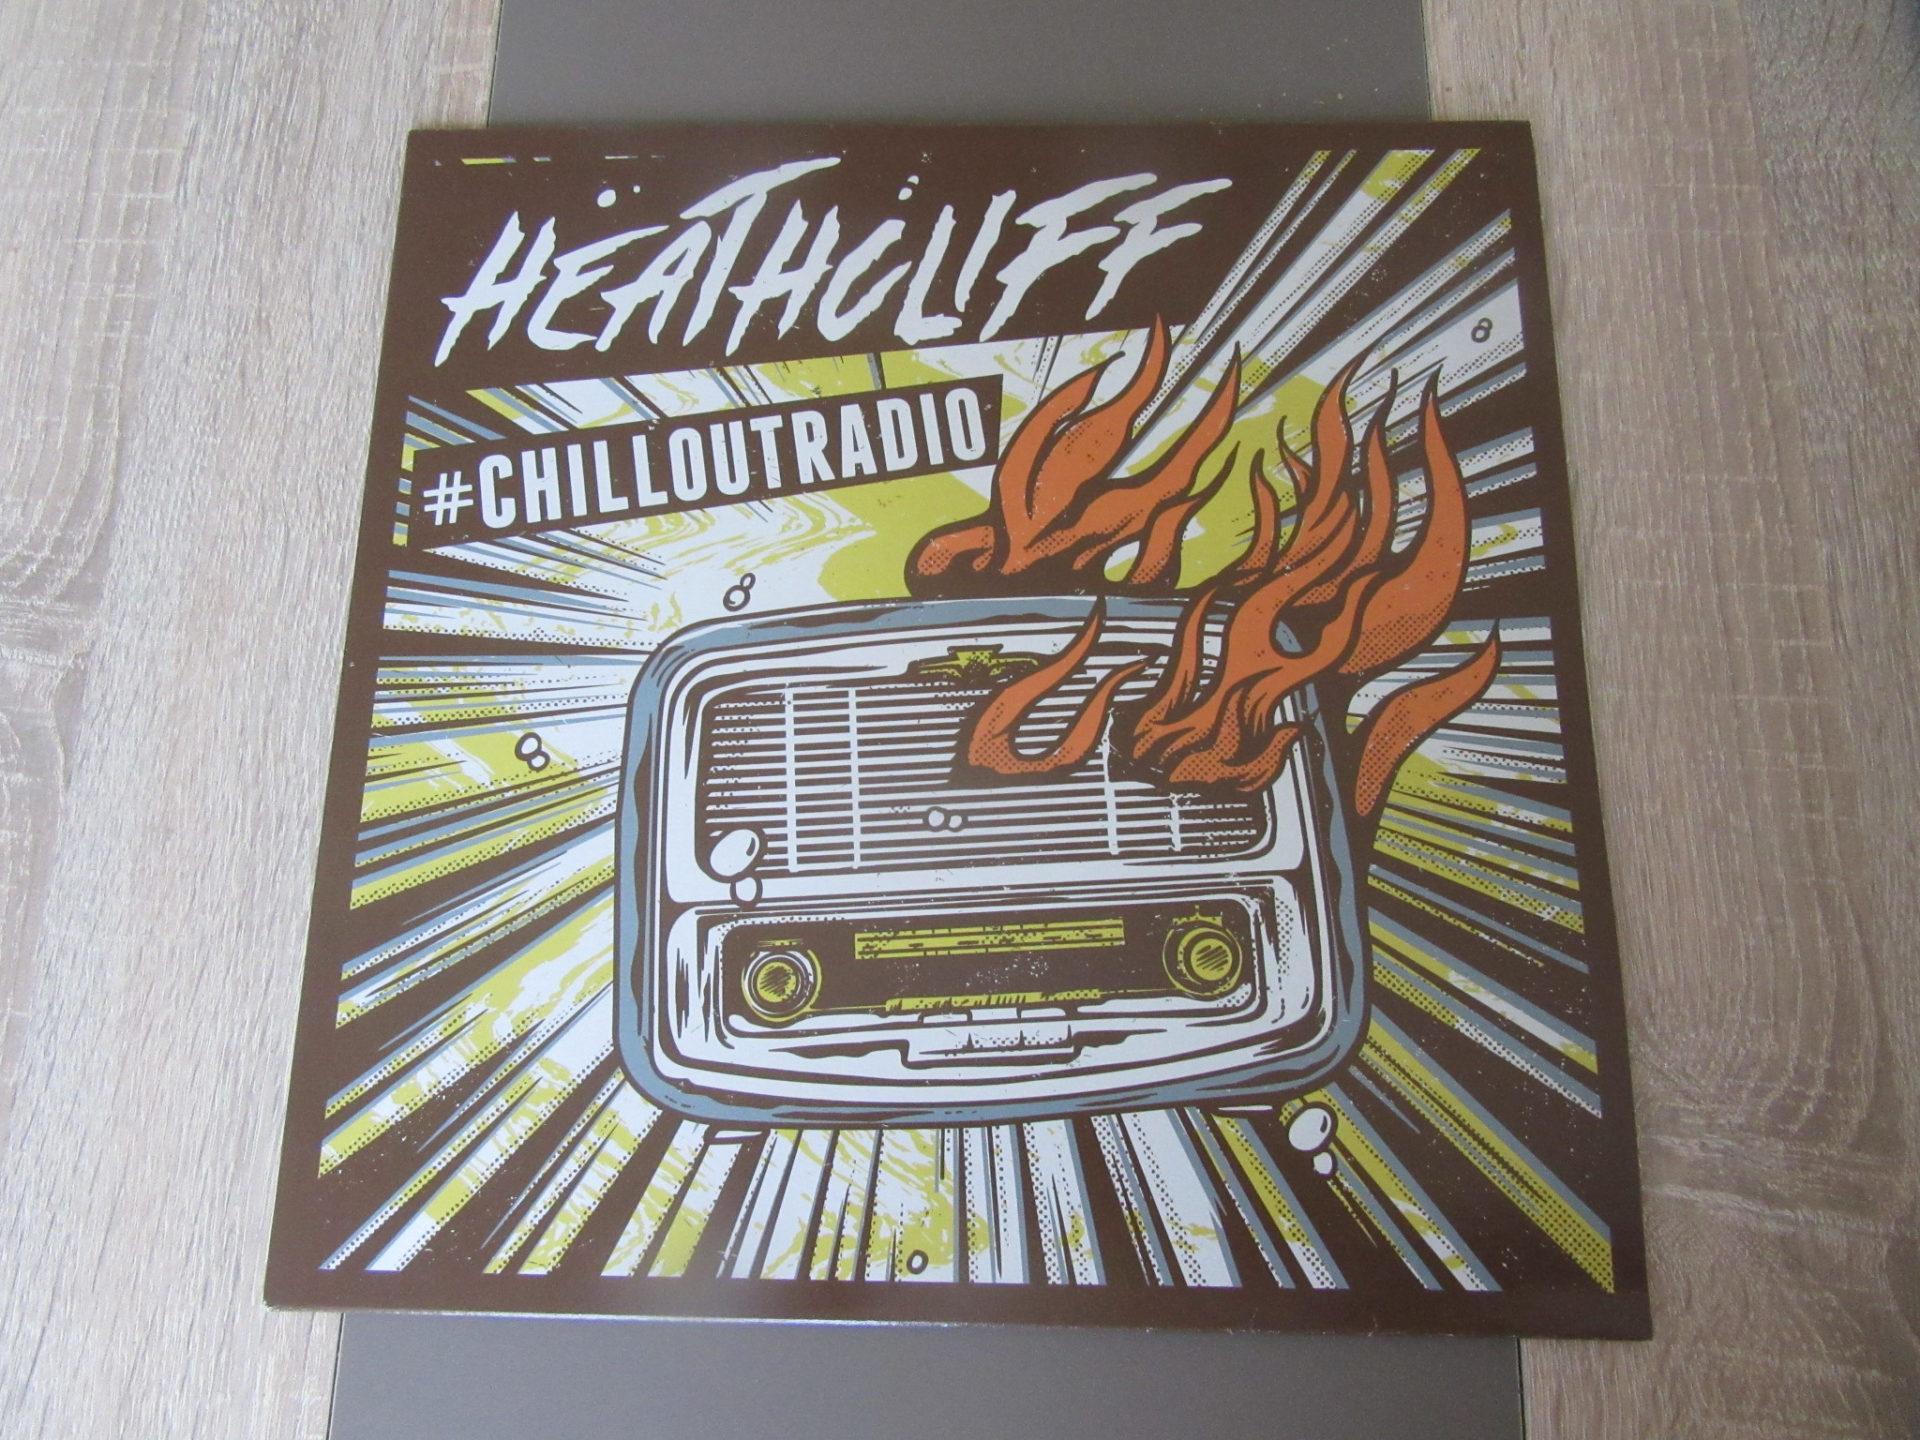 Heathcliff - "Chillout Radio" col. Vinyl-LP 1